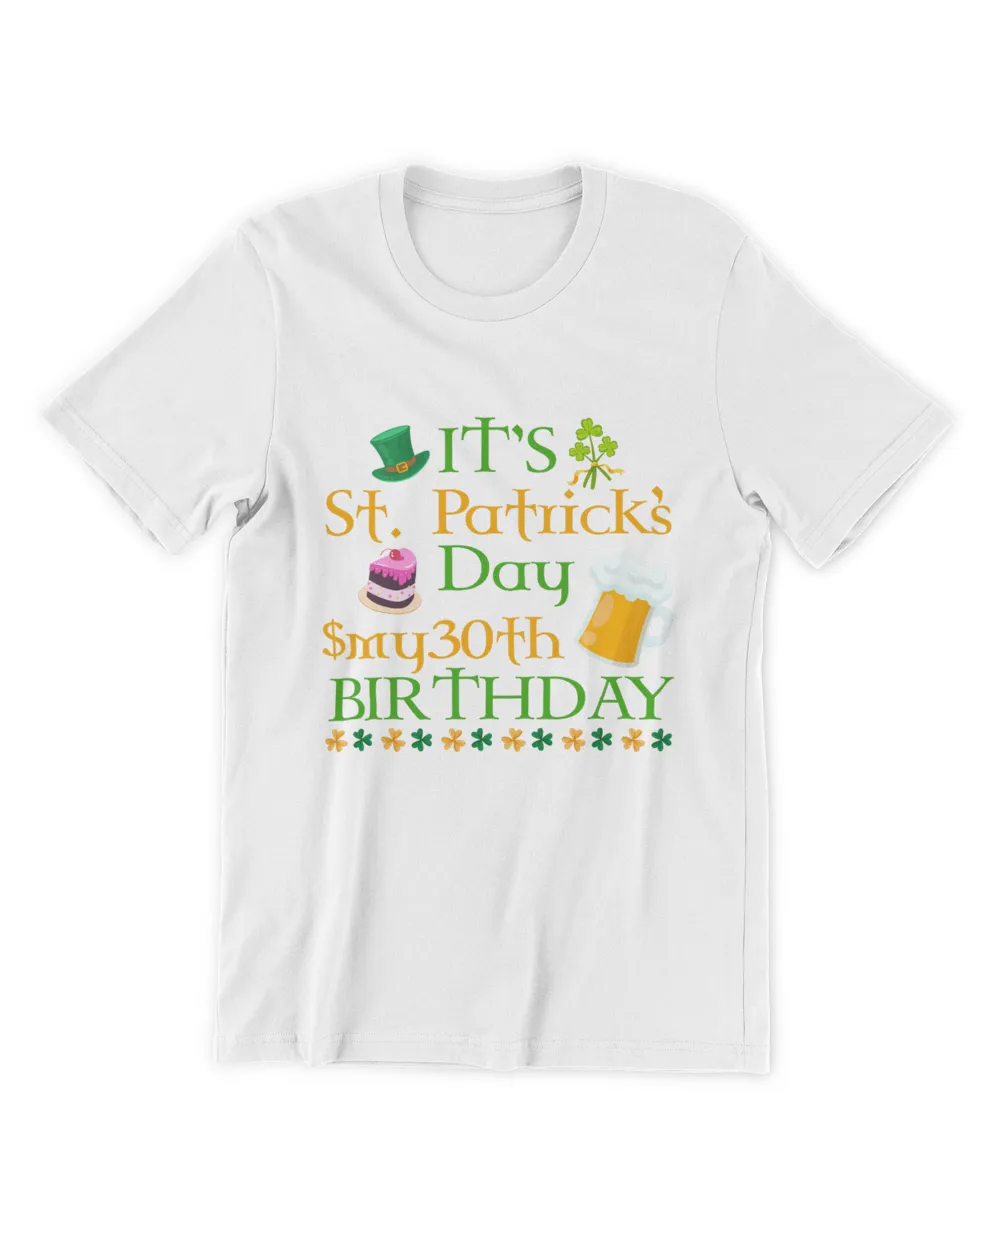 RD Beer Cake & Shamrocks It's St Patrick Day & My 30th Birthday Shirt